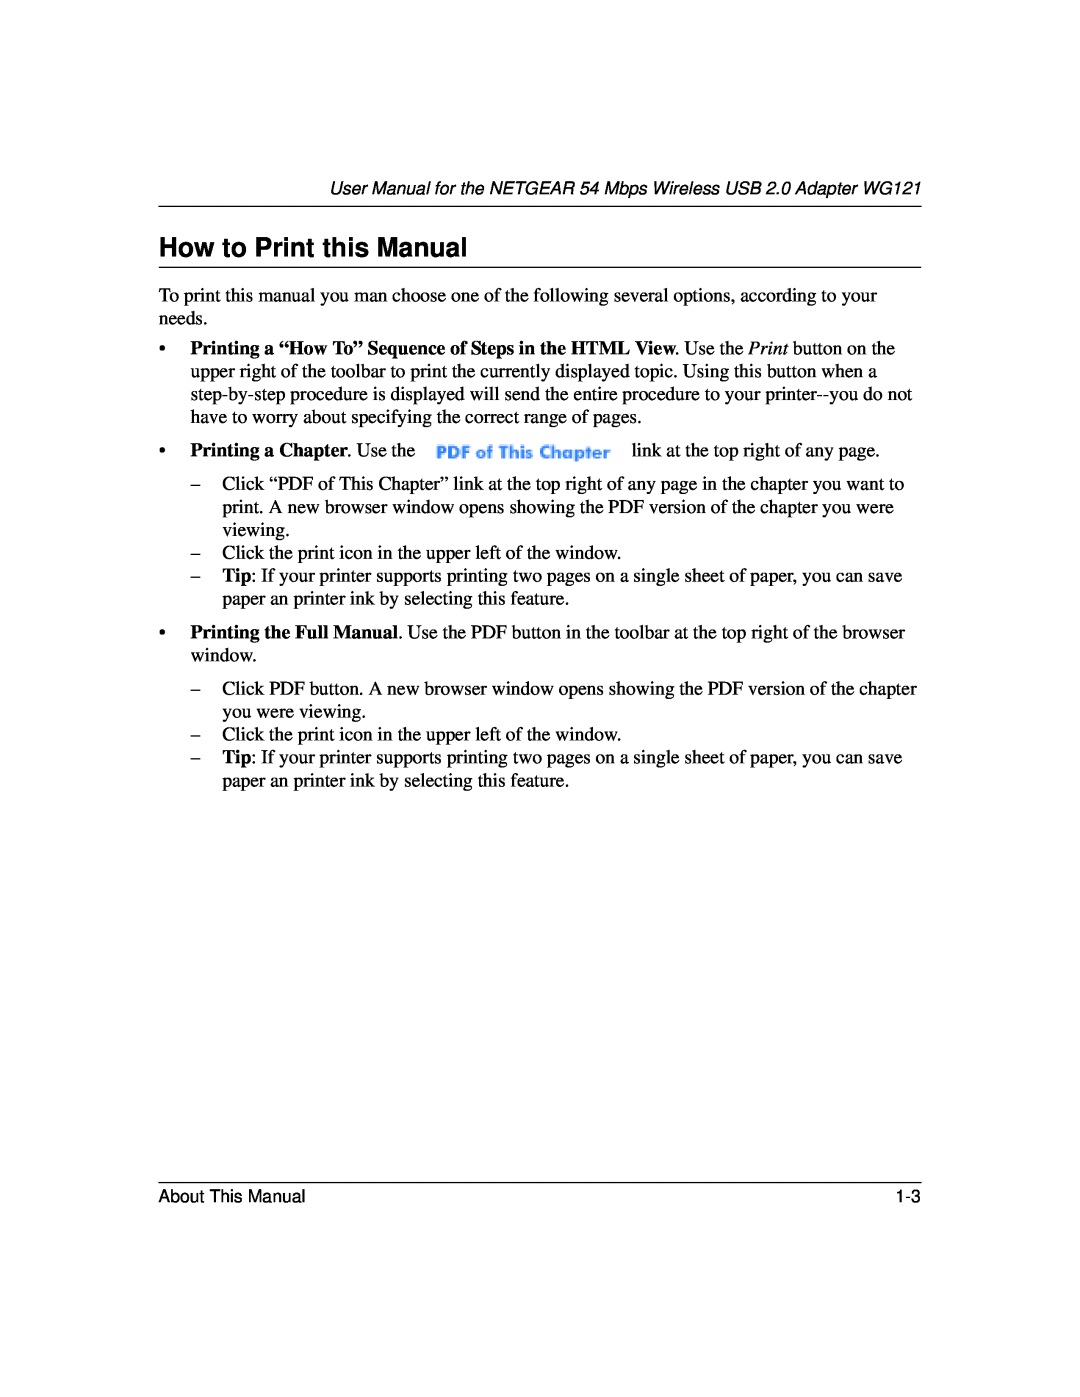 NETGEAR WG121 user manual How to Print this Manual 